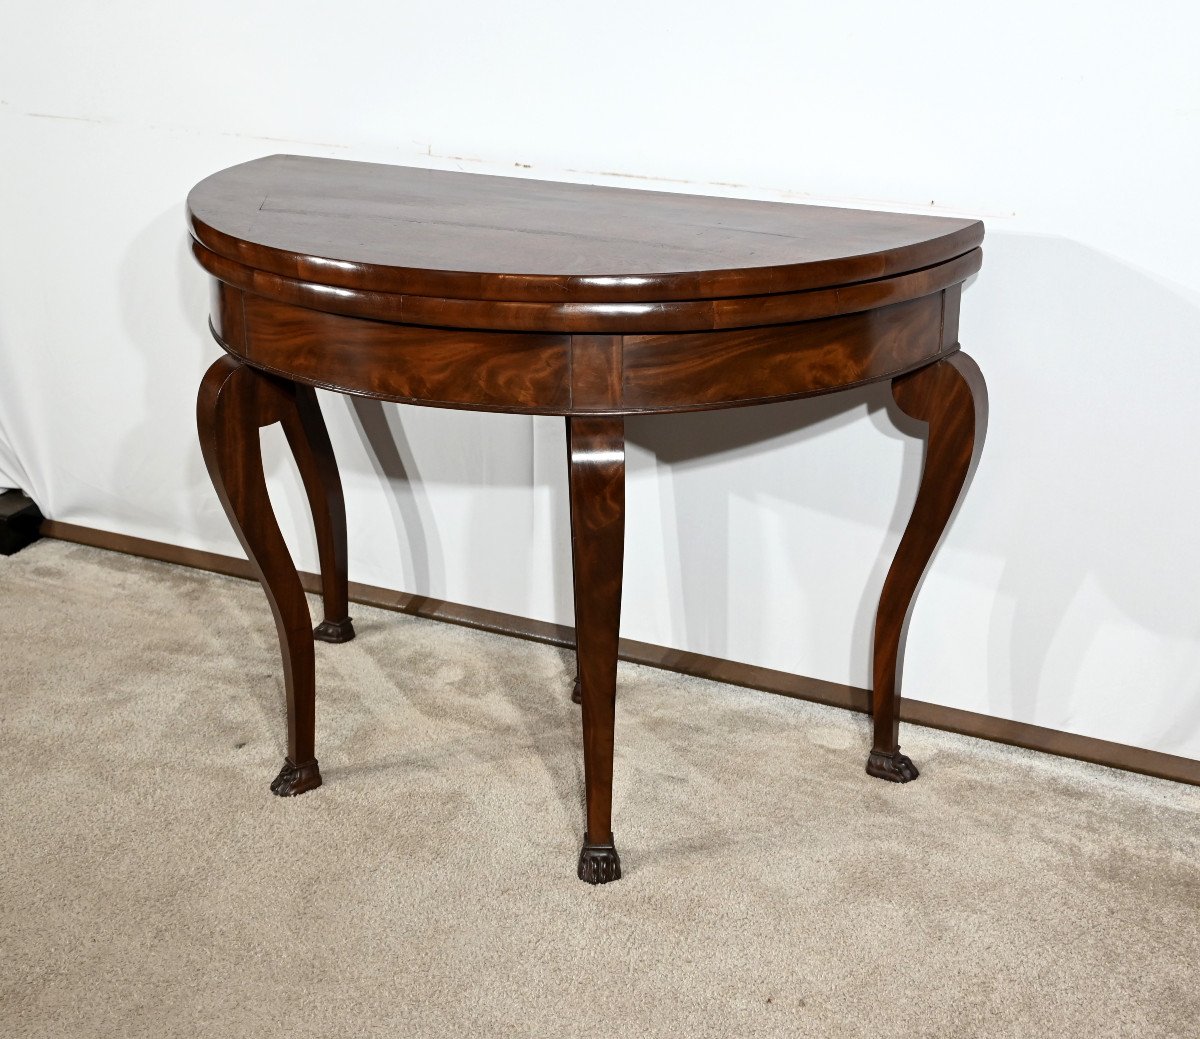 Mahogany Console Table, Restoration Period – Early 19th Century-photo-3